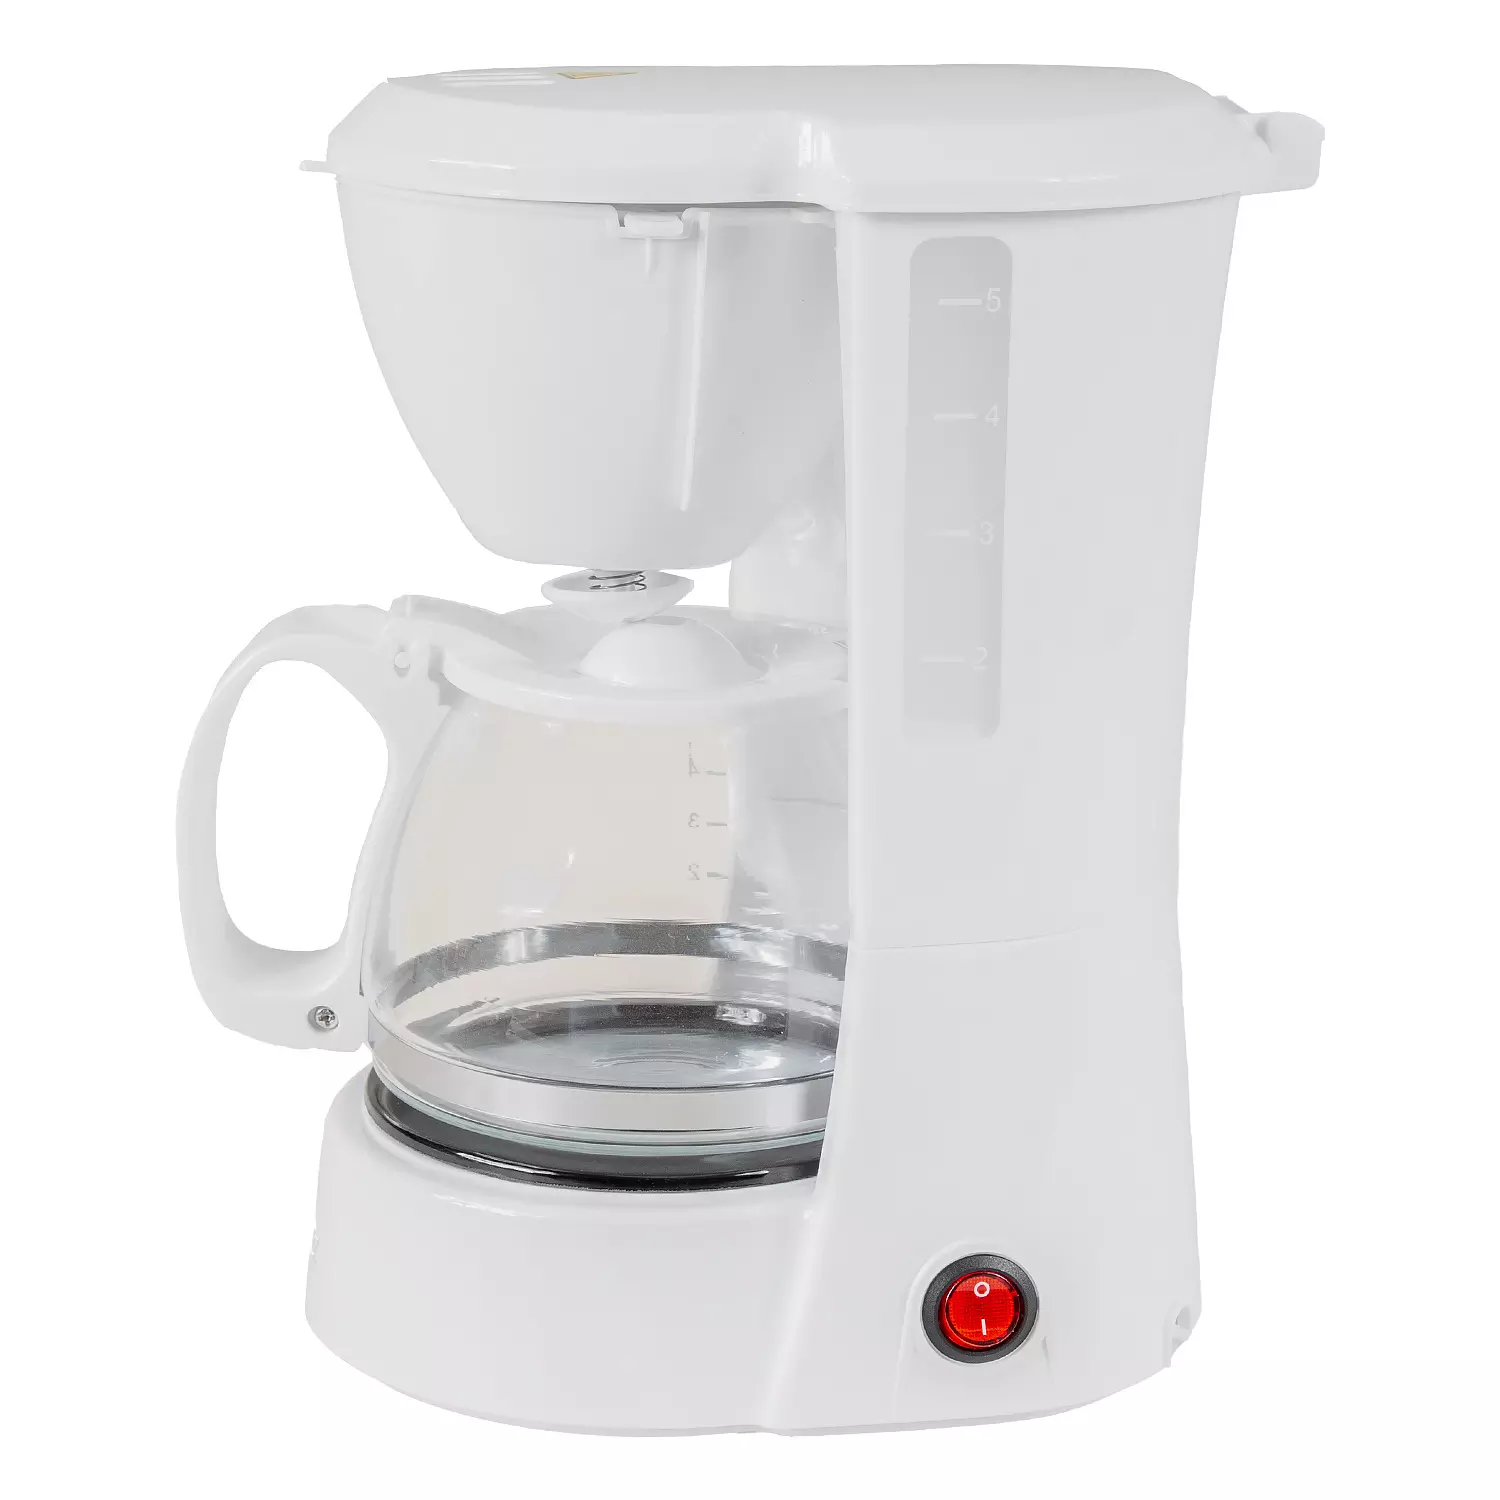 Hauz Basics - 5 cup coffee maker, white